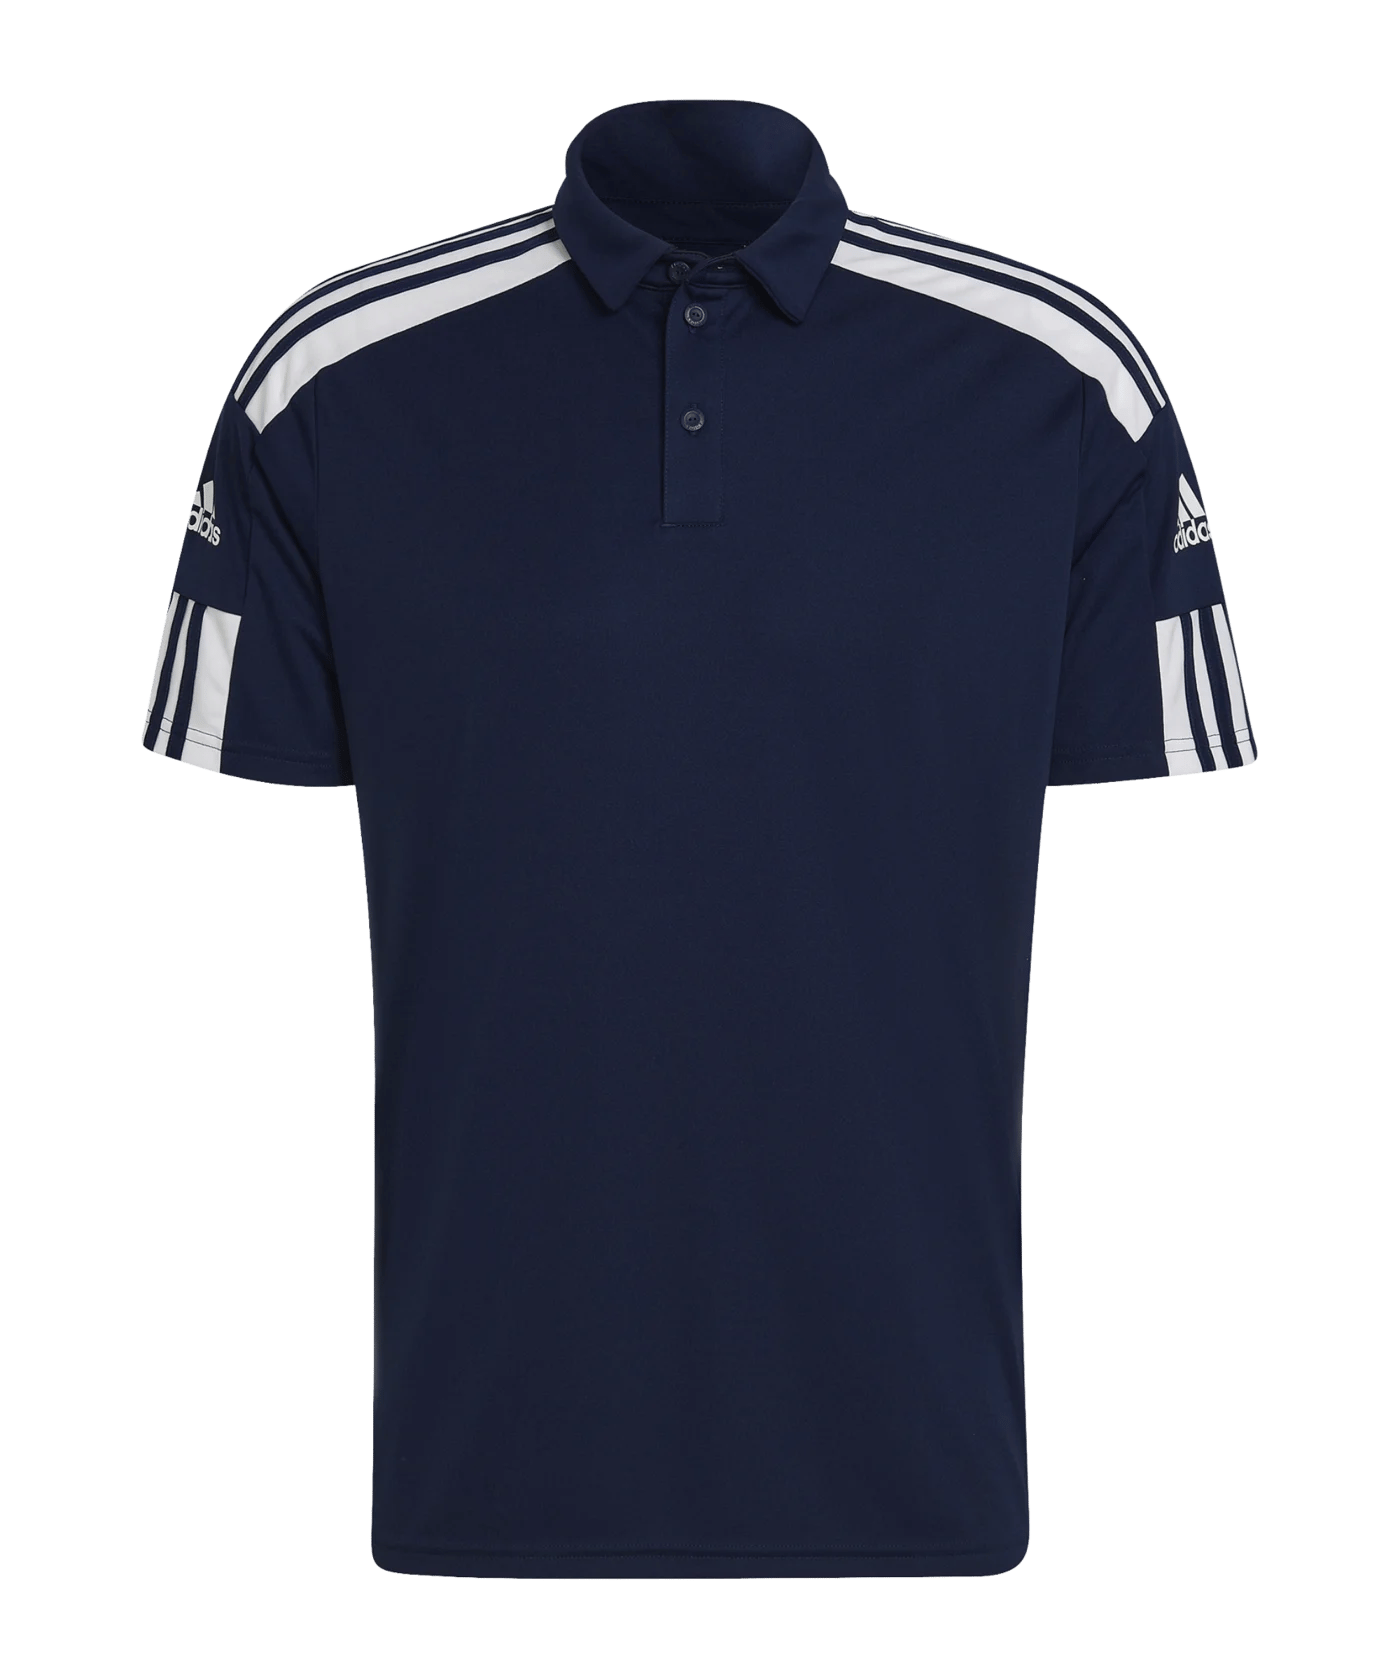 Adidas Kinder Poloshirt Squadra 21 blau-weiß